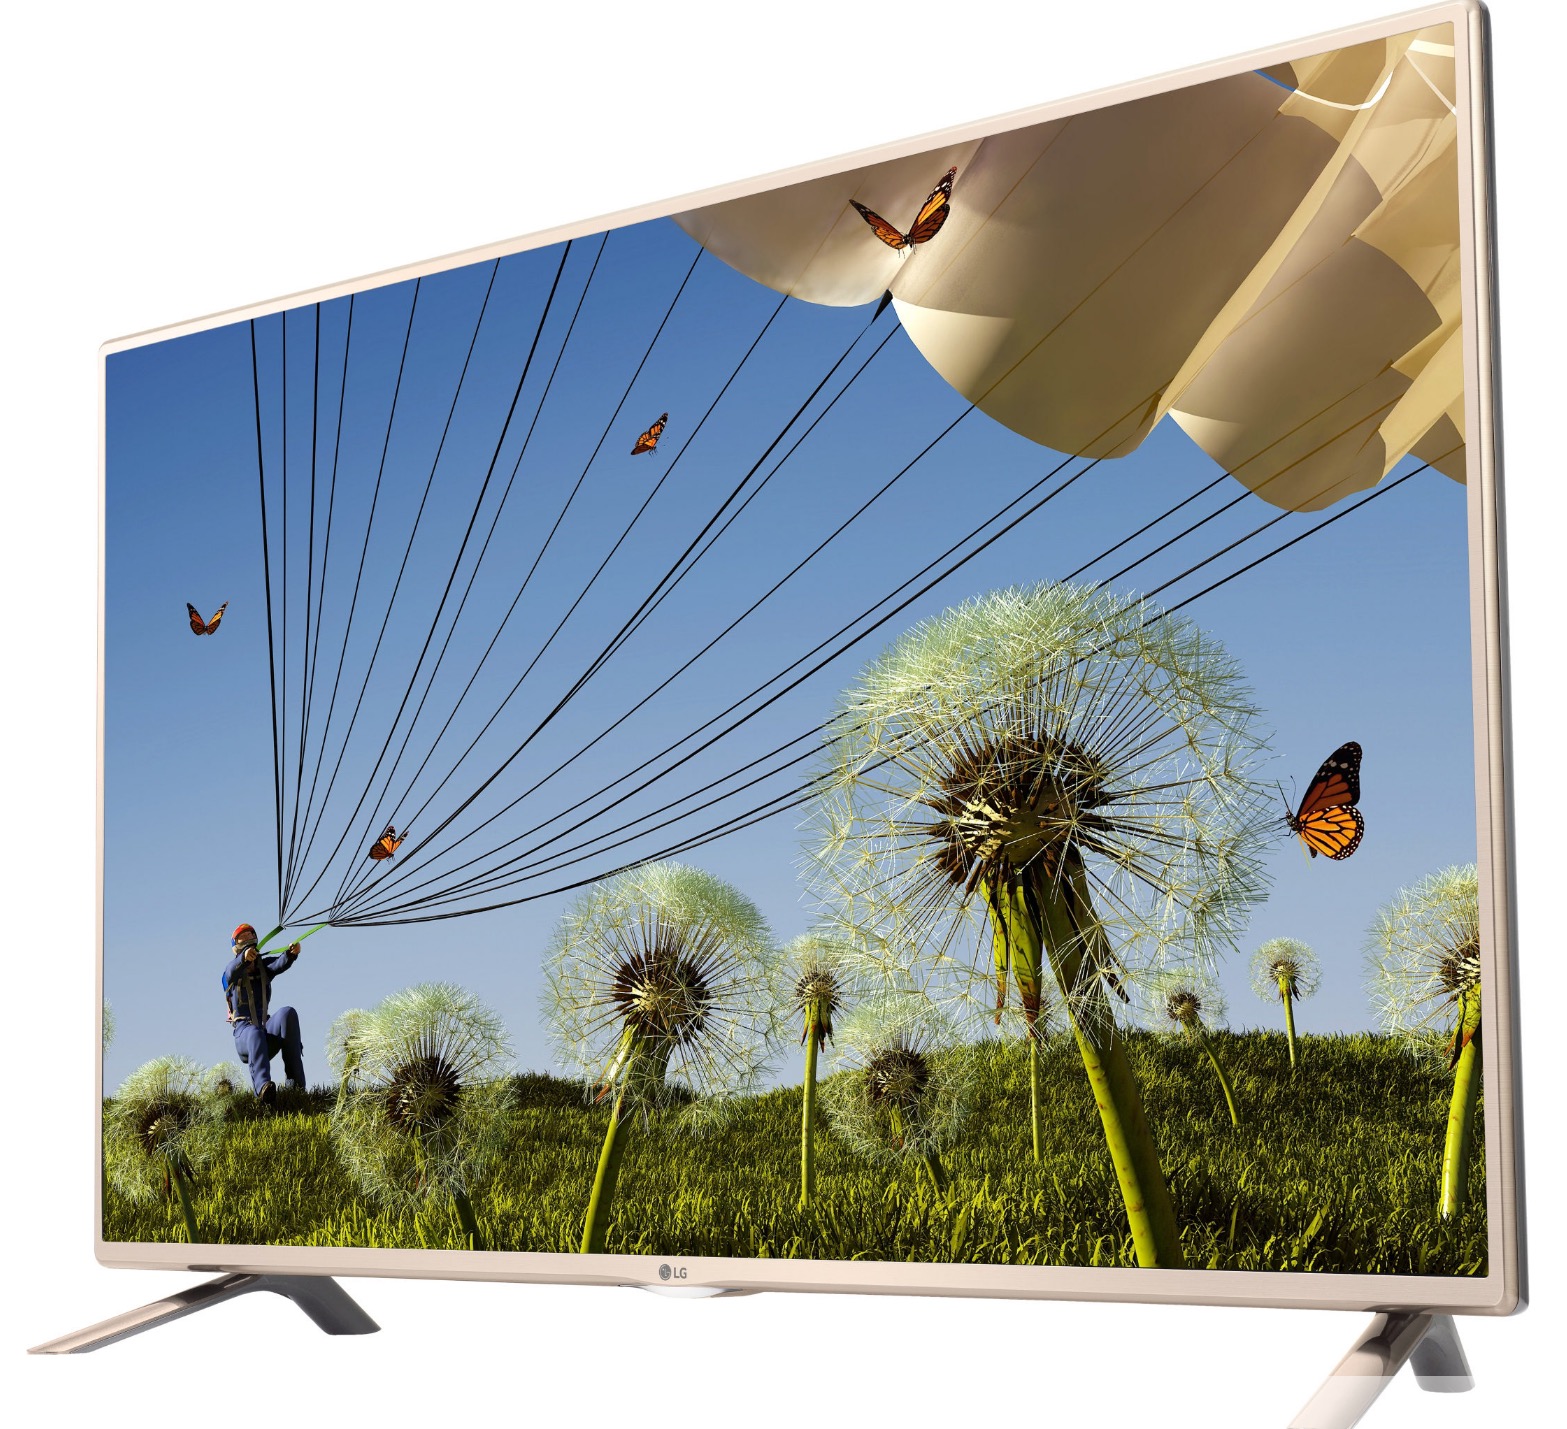 LG 32LF5610 32″ Fernseher (Full HD, Twin Tuner) nur 214,99 Euro inkl. Versand